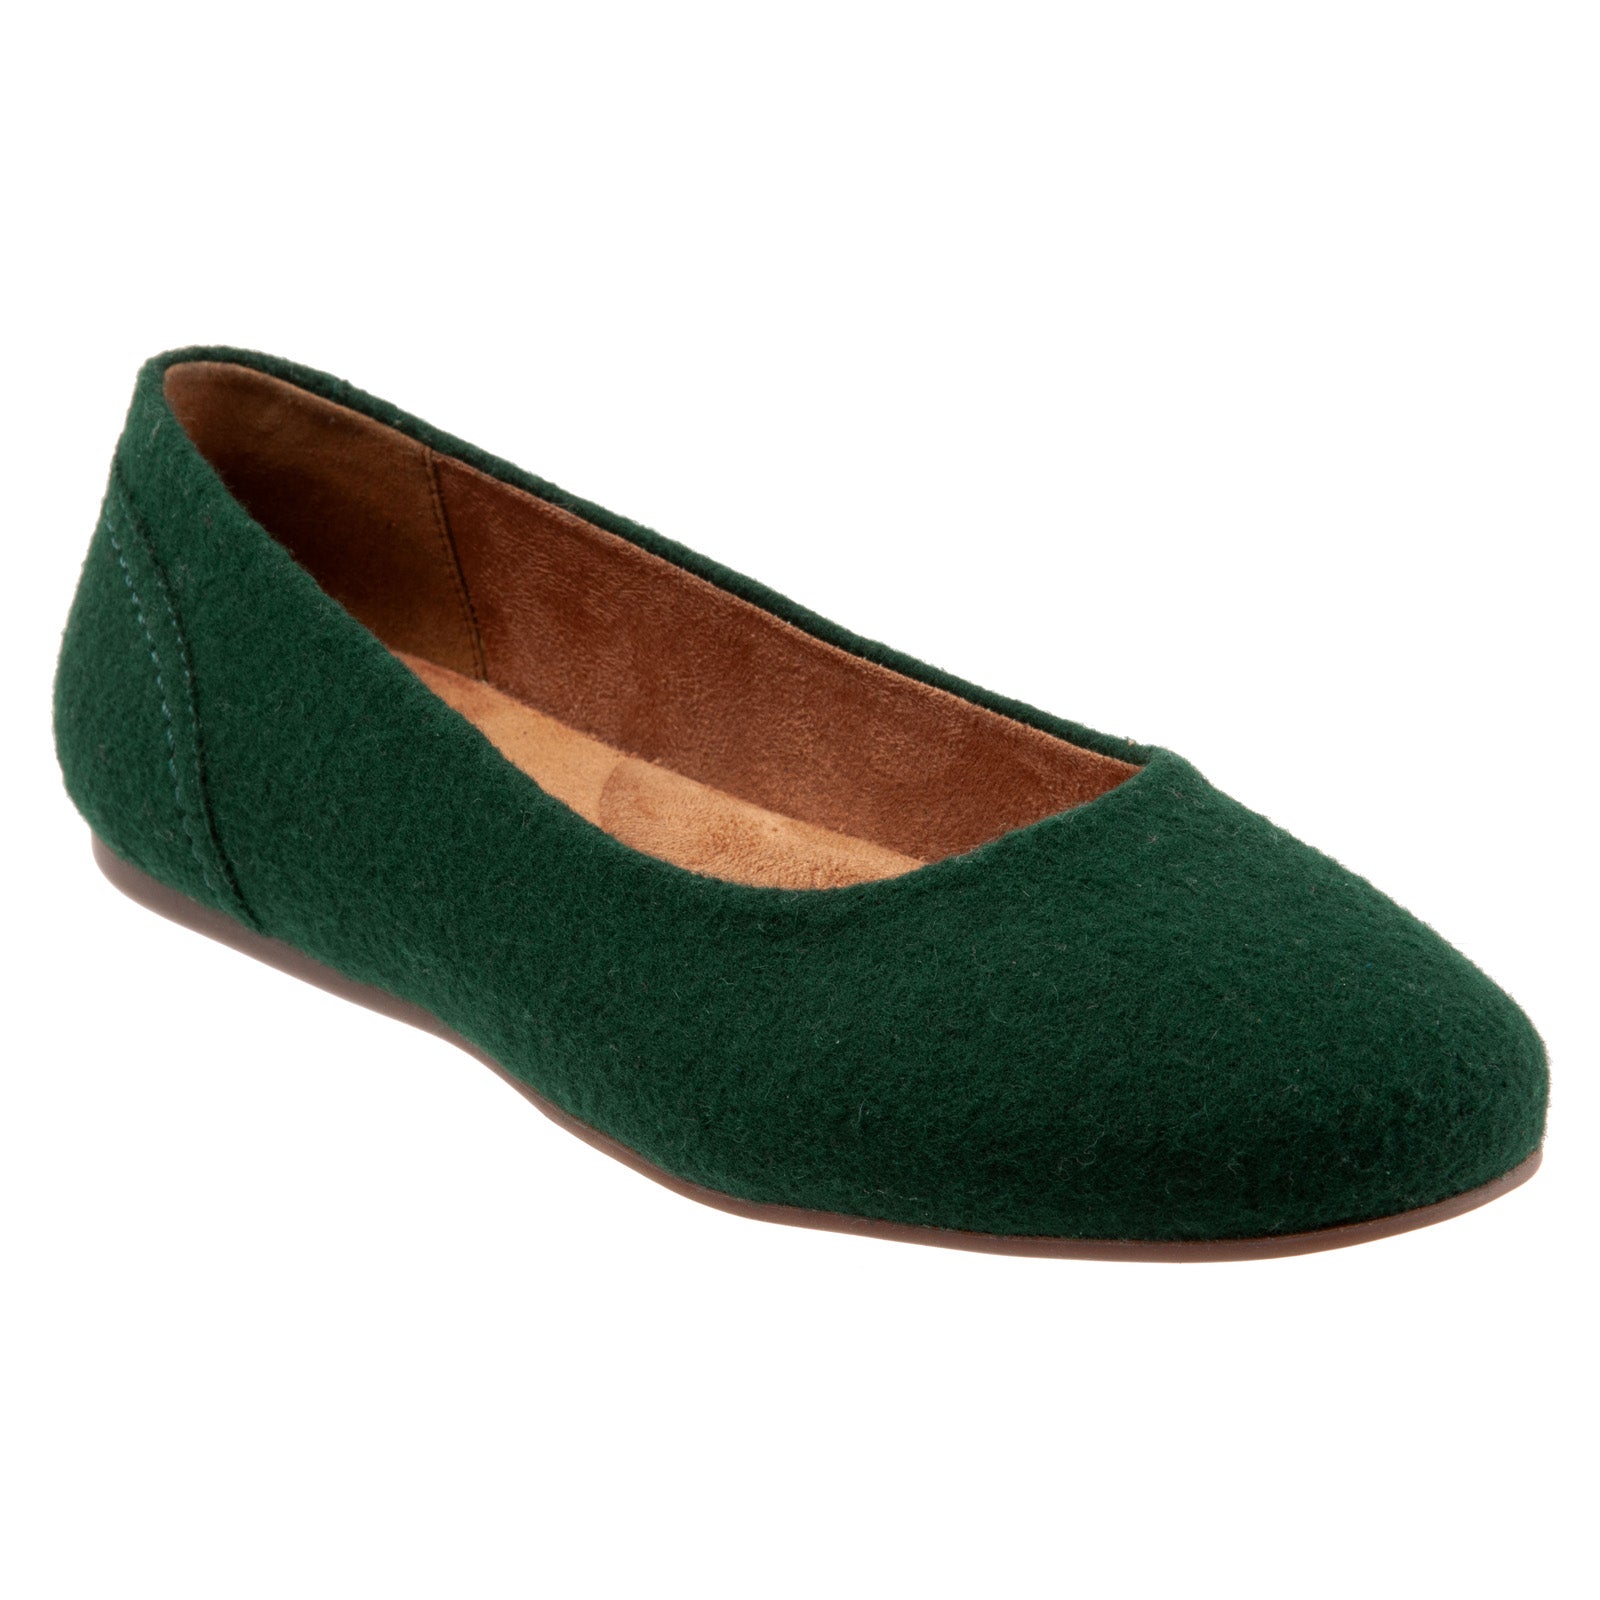 Softwalk Shiraz S2160-335 Womens Green Suede Slip On Ballet Flats Shoes